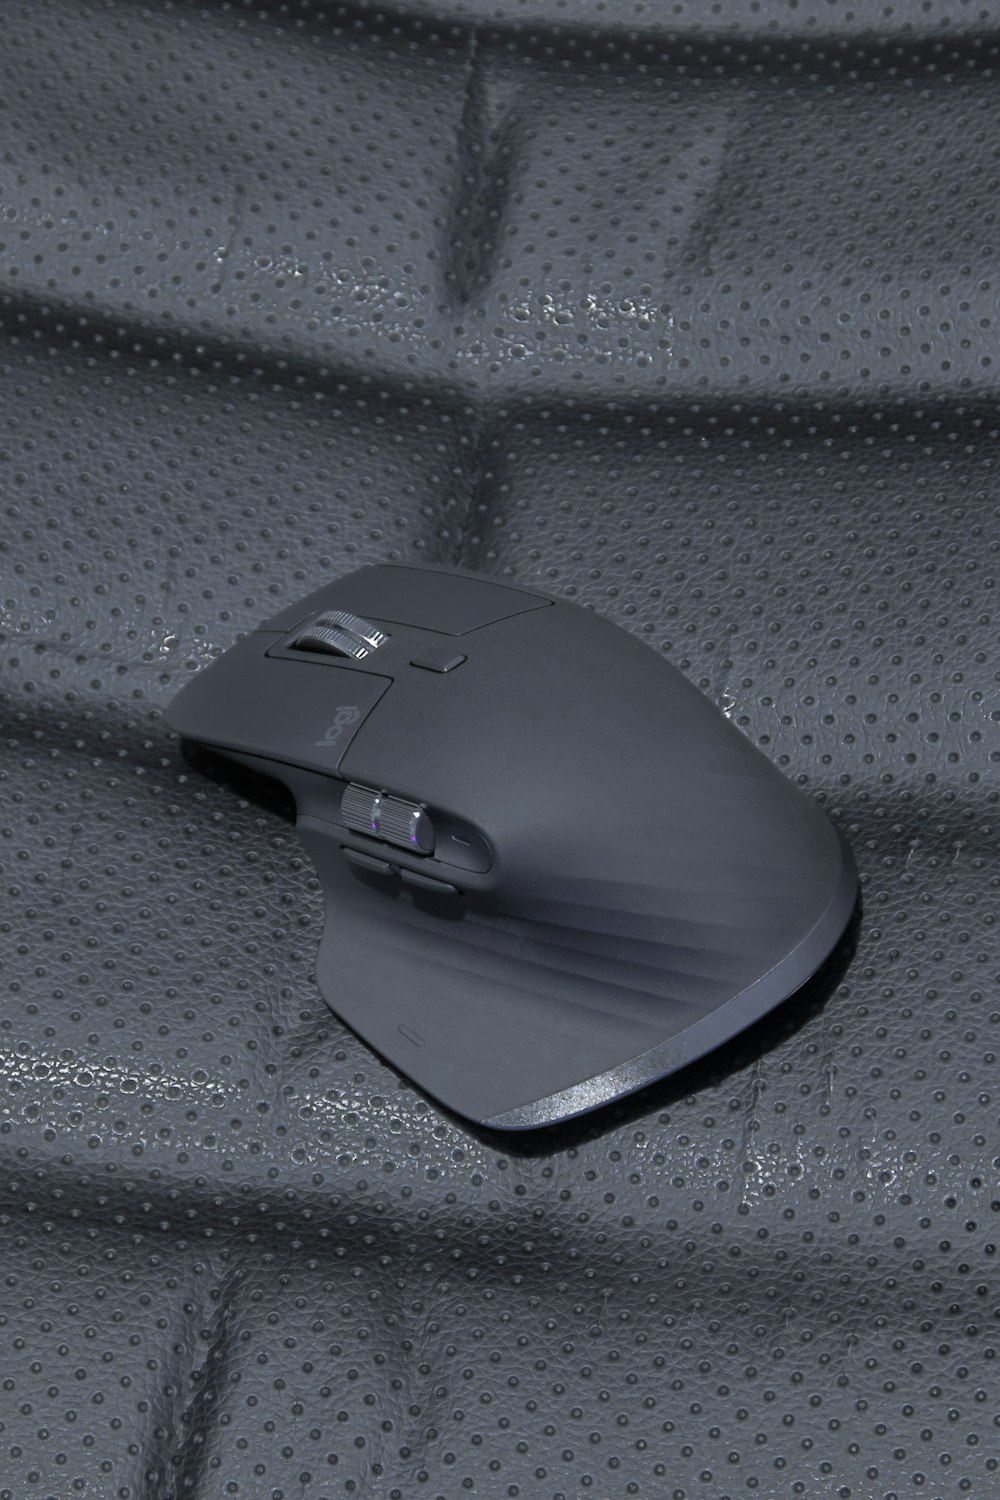 black cordless computer mouse on gray textile